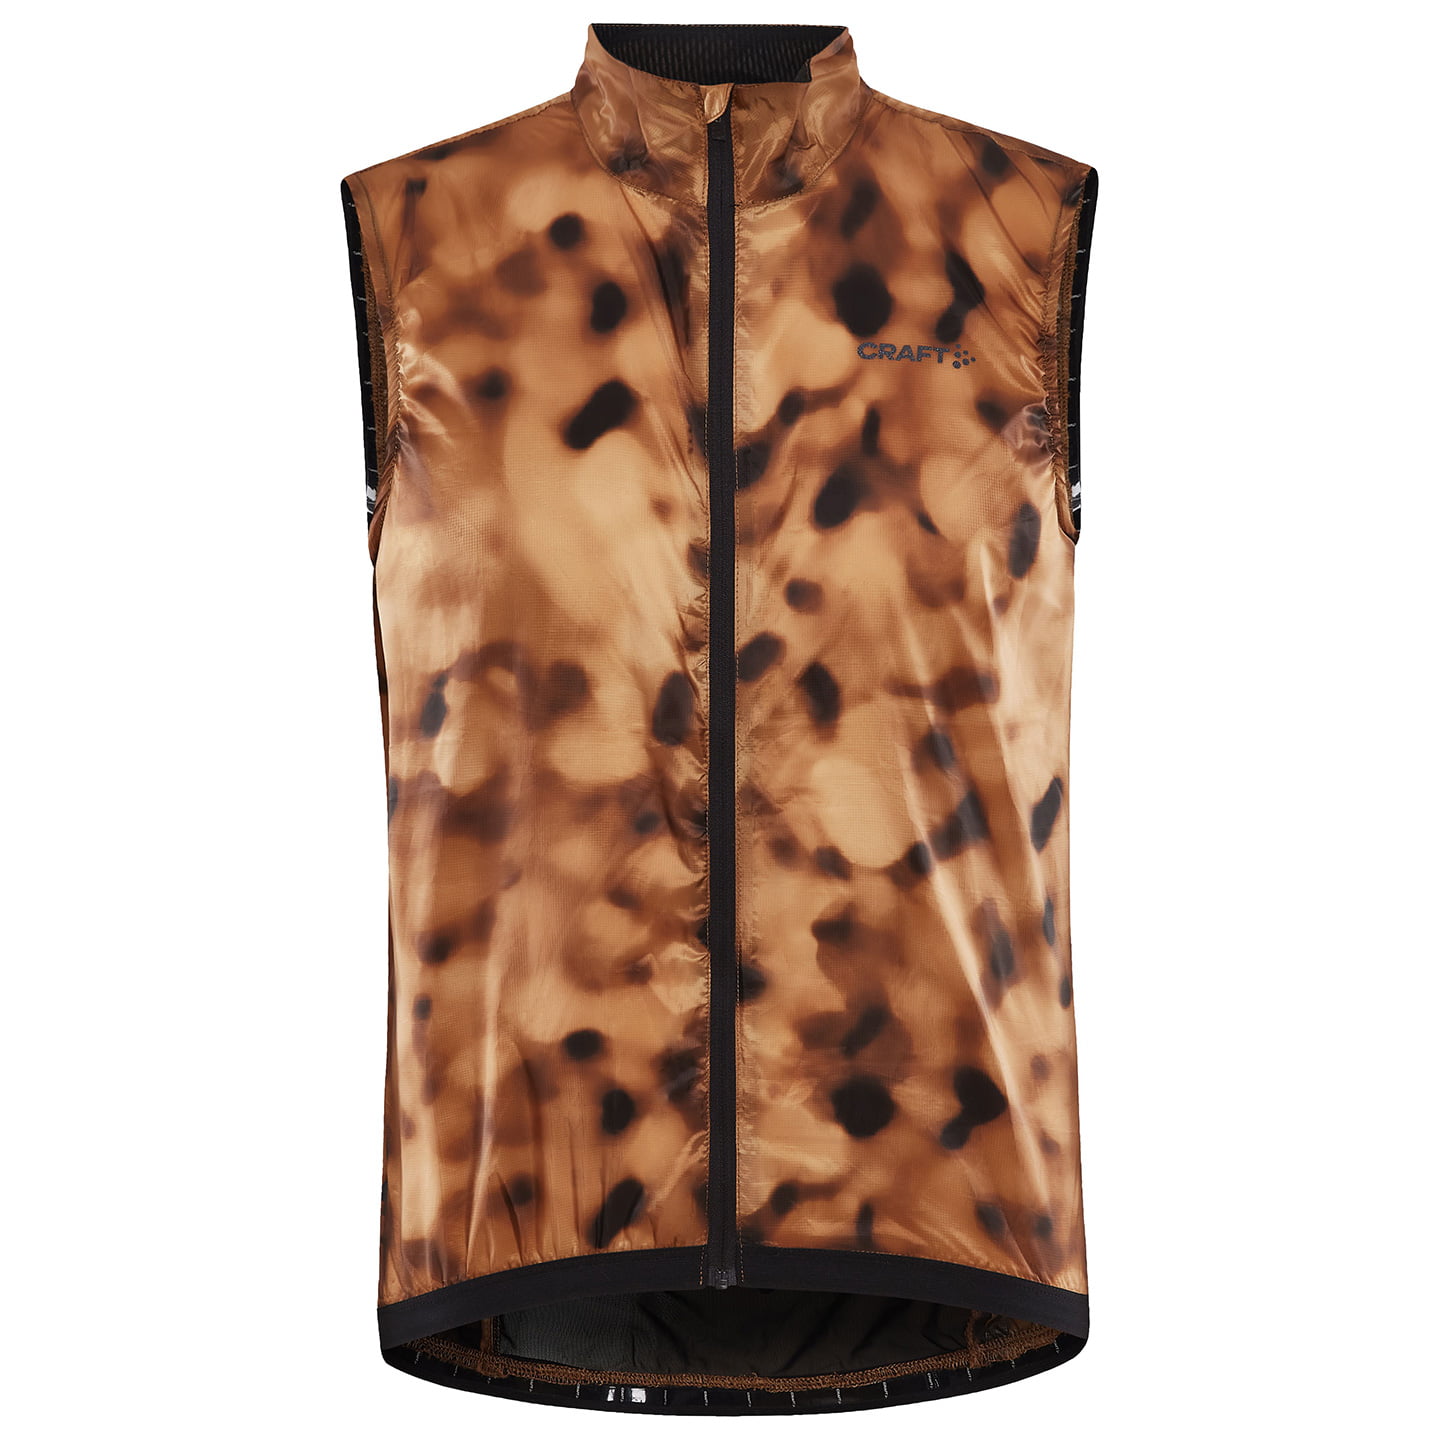 CRAFT Pro Gravel Wind Vest Wind Vest, for men, size M, Cycling vest, Cycle clothing